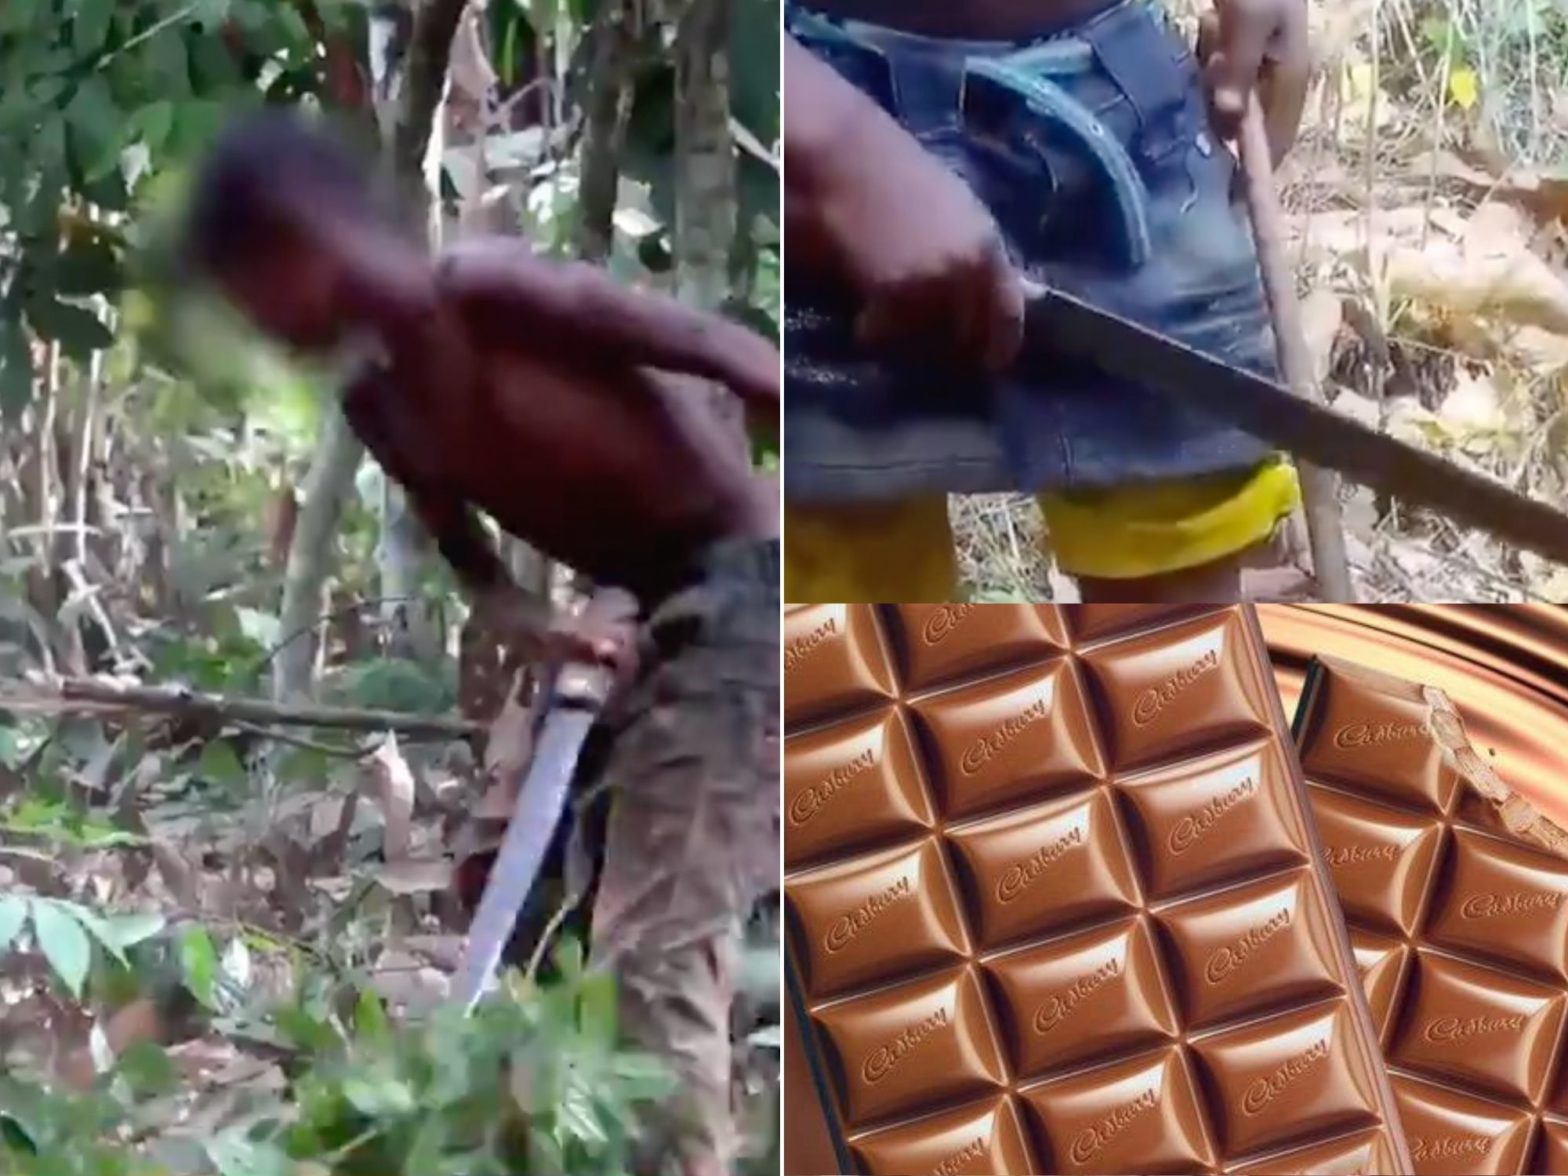 Cadbury company accused of using child labor on cocoa farms in Ghana